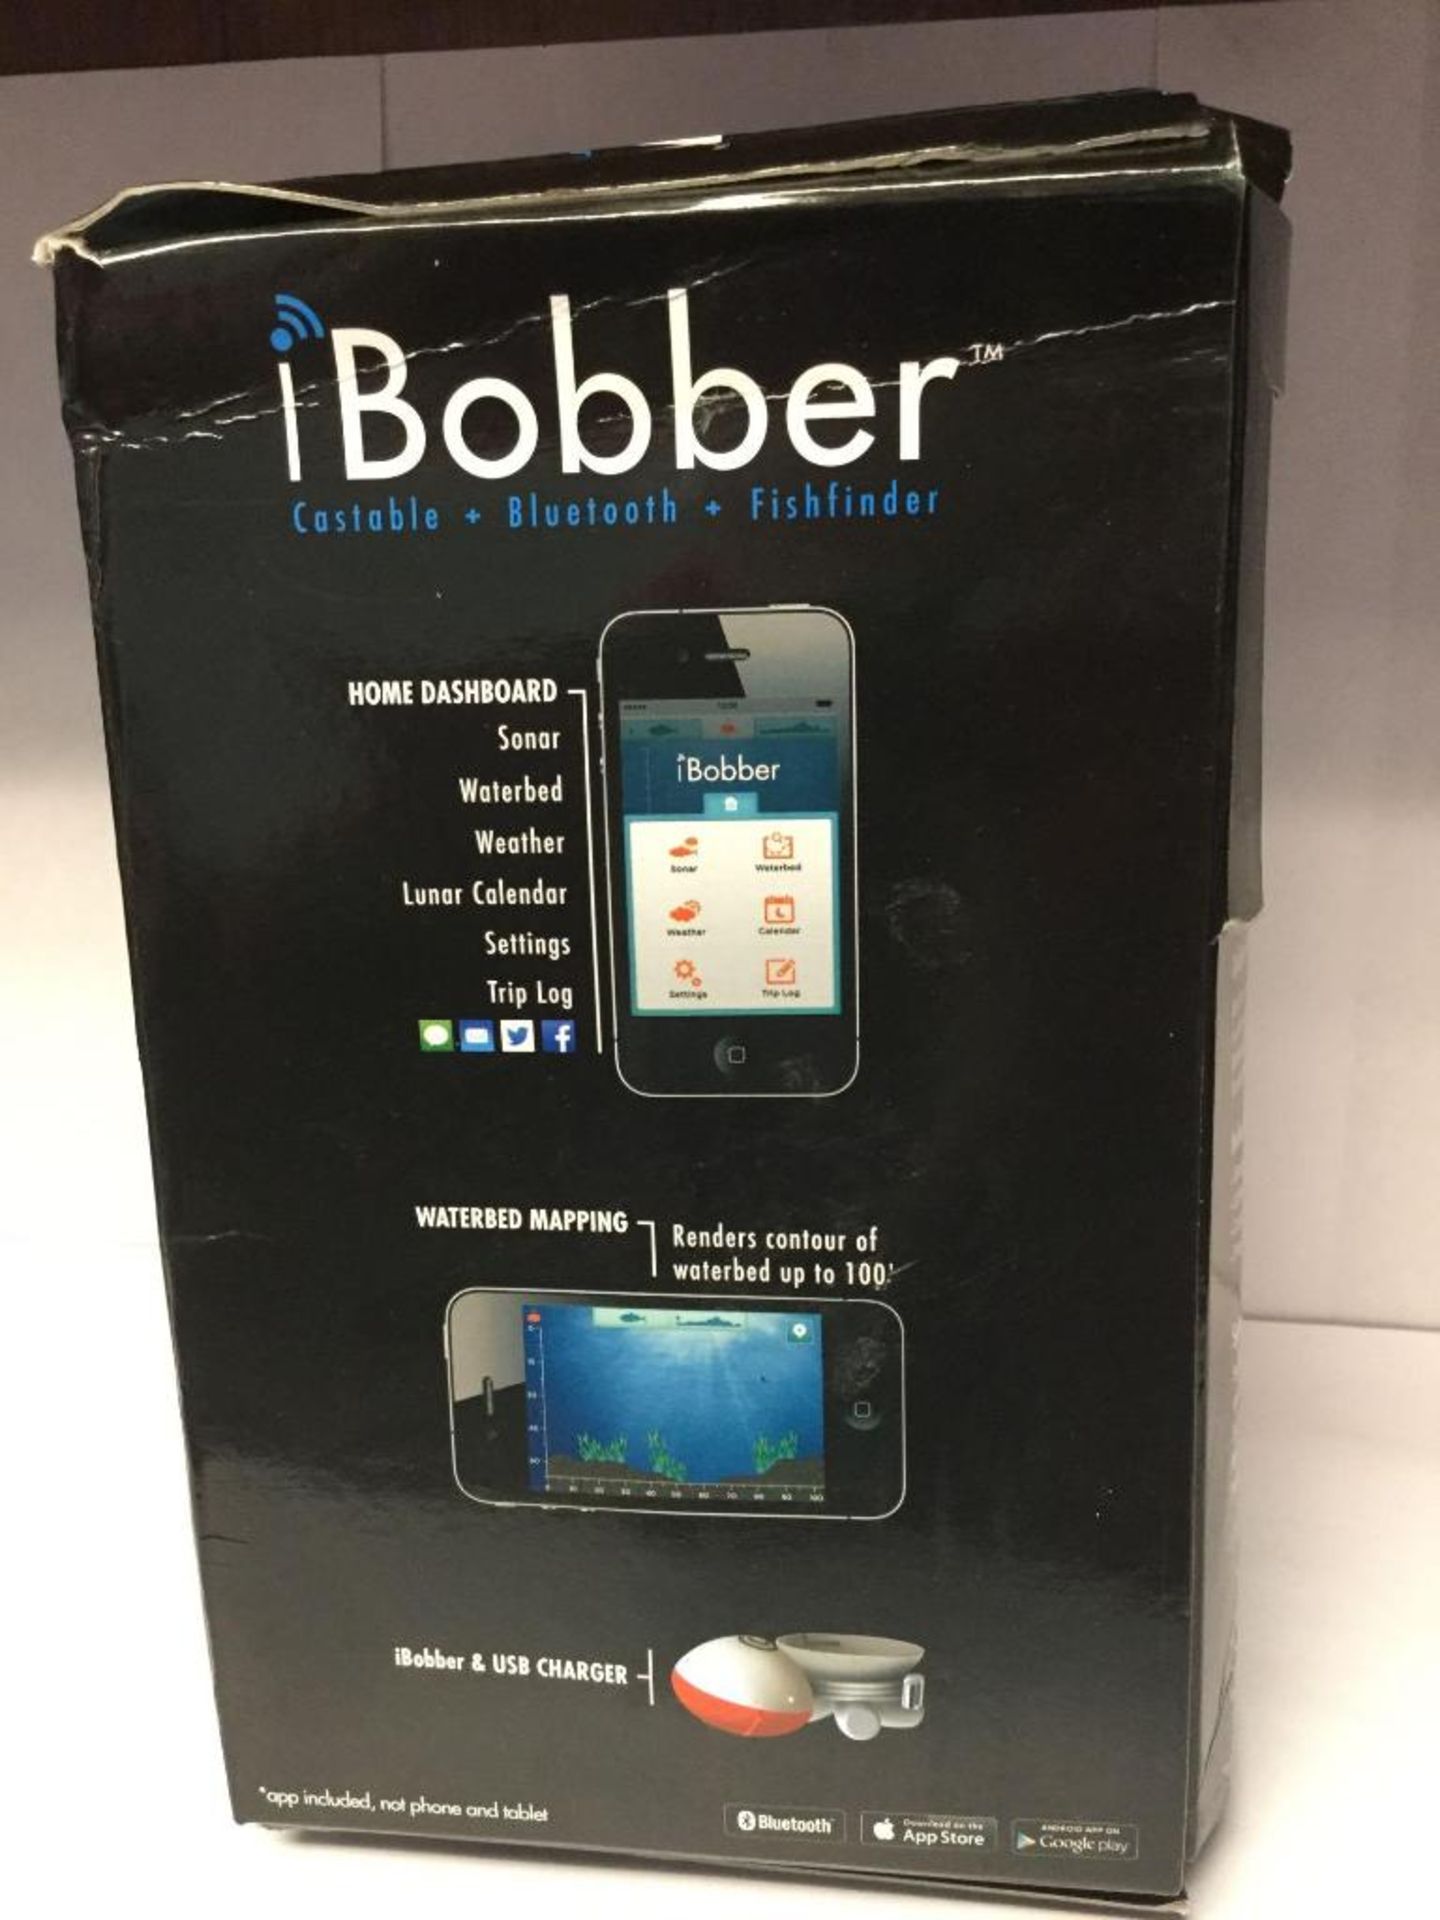 iBobber™ The Castable Bluetooth Smart® Fishfinder - Image 2 of 2